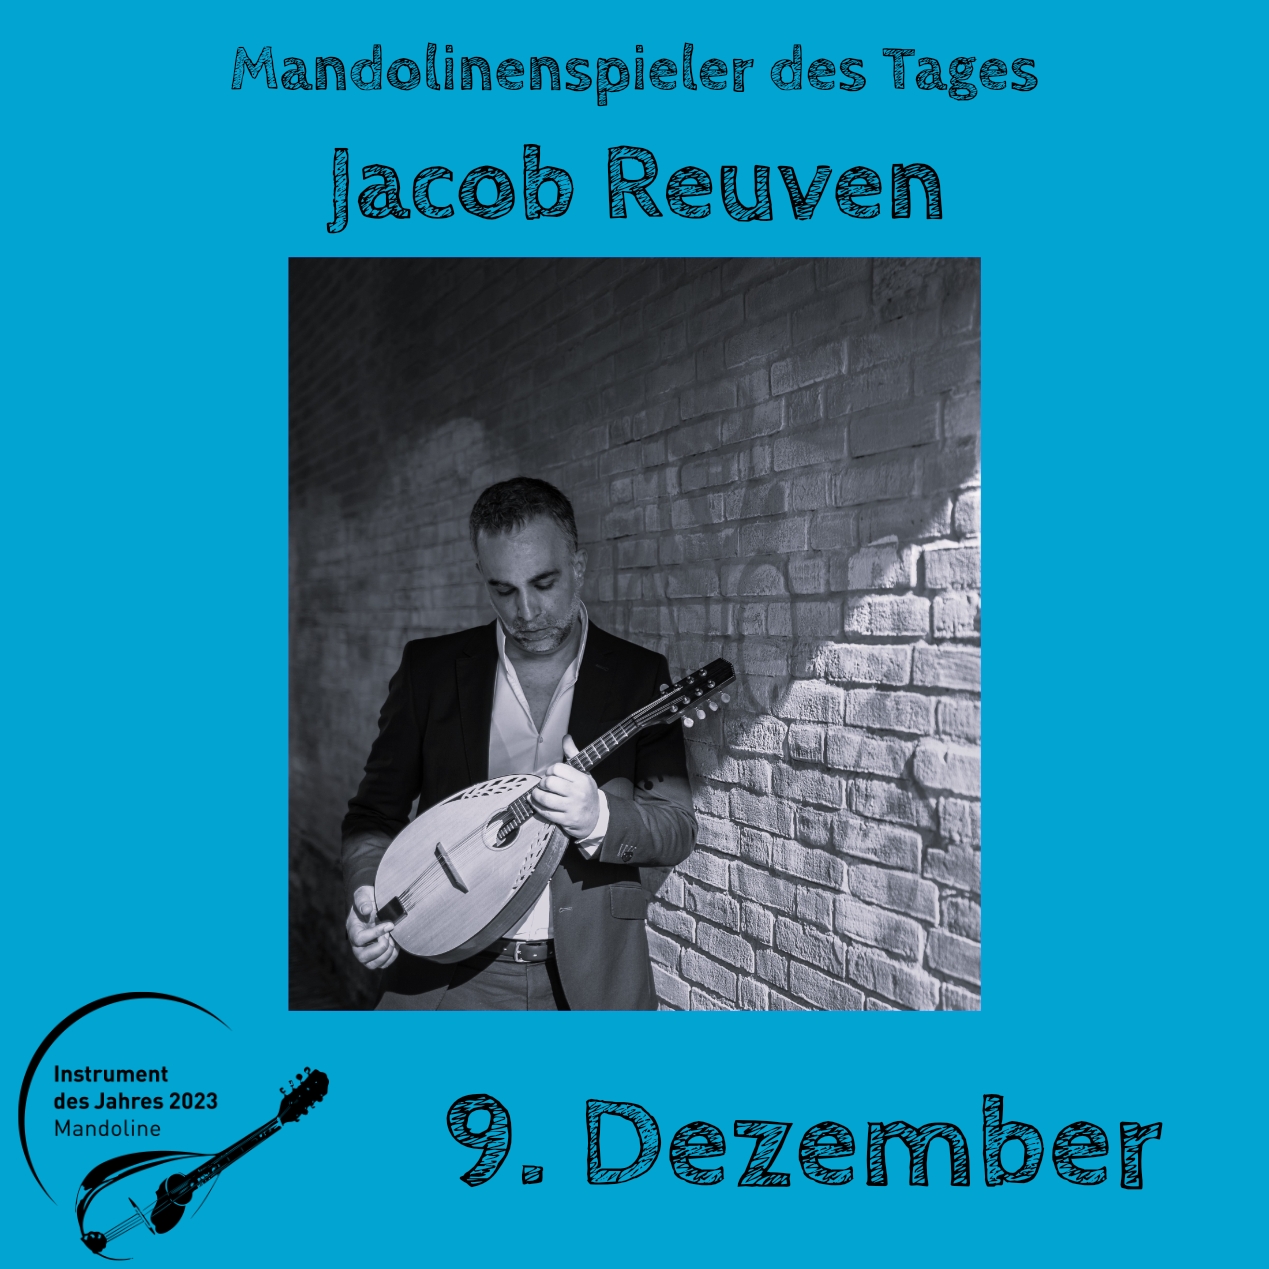 9. Dezember - Jacob Reuven Instrument des Jahres 2023 Mandolinenspieler Mandolinenspielerin des Tages